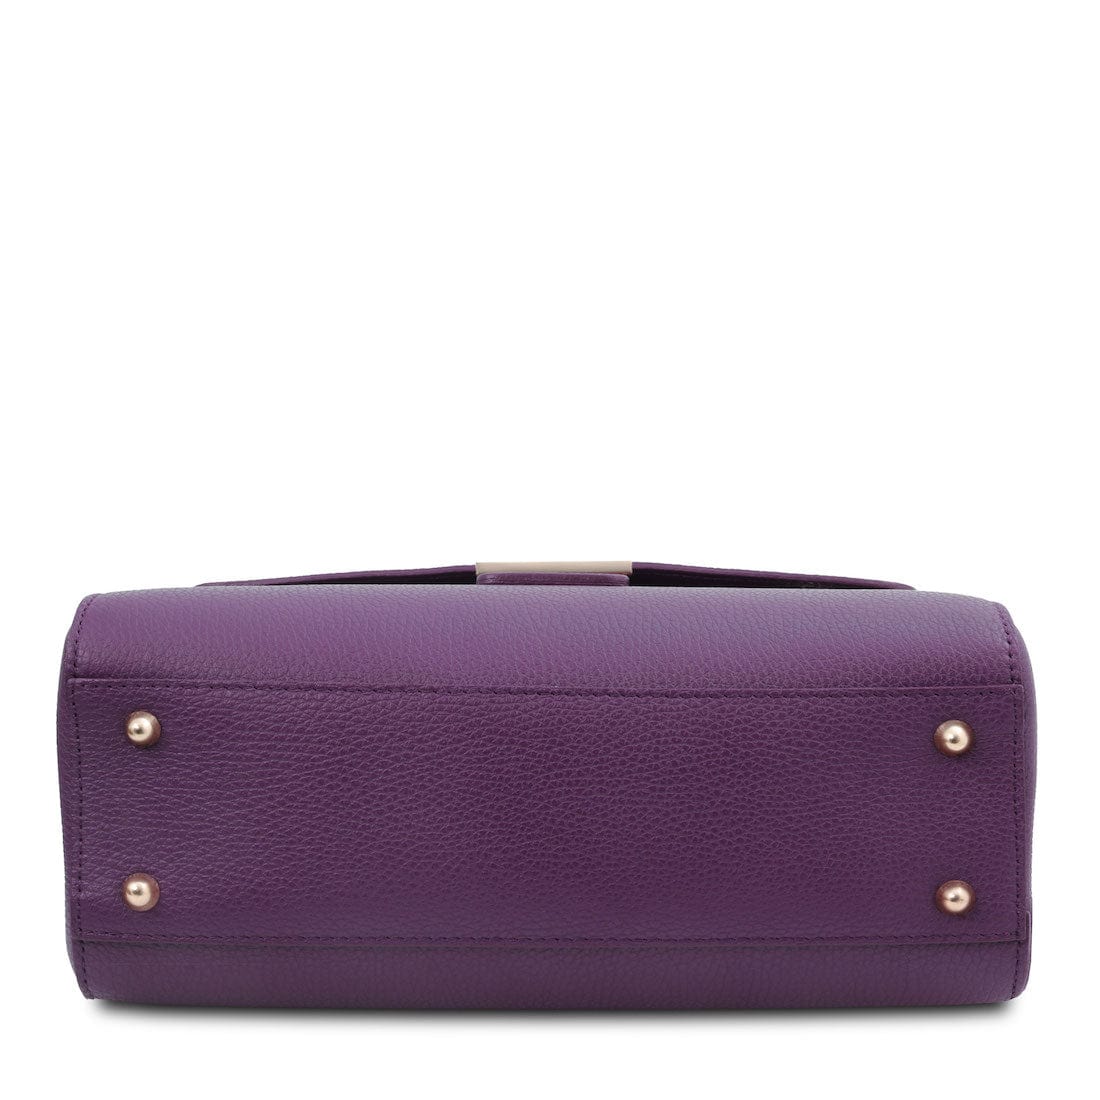 TL Bag - Leather handbag | TL142156 - Premium Leather handbags - Shop now at San Rocco Italia